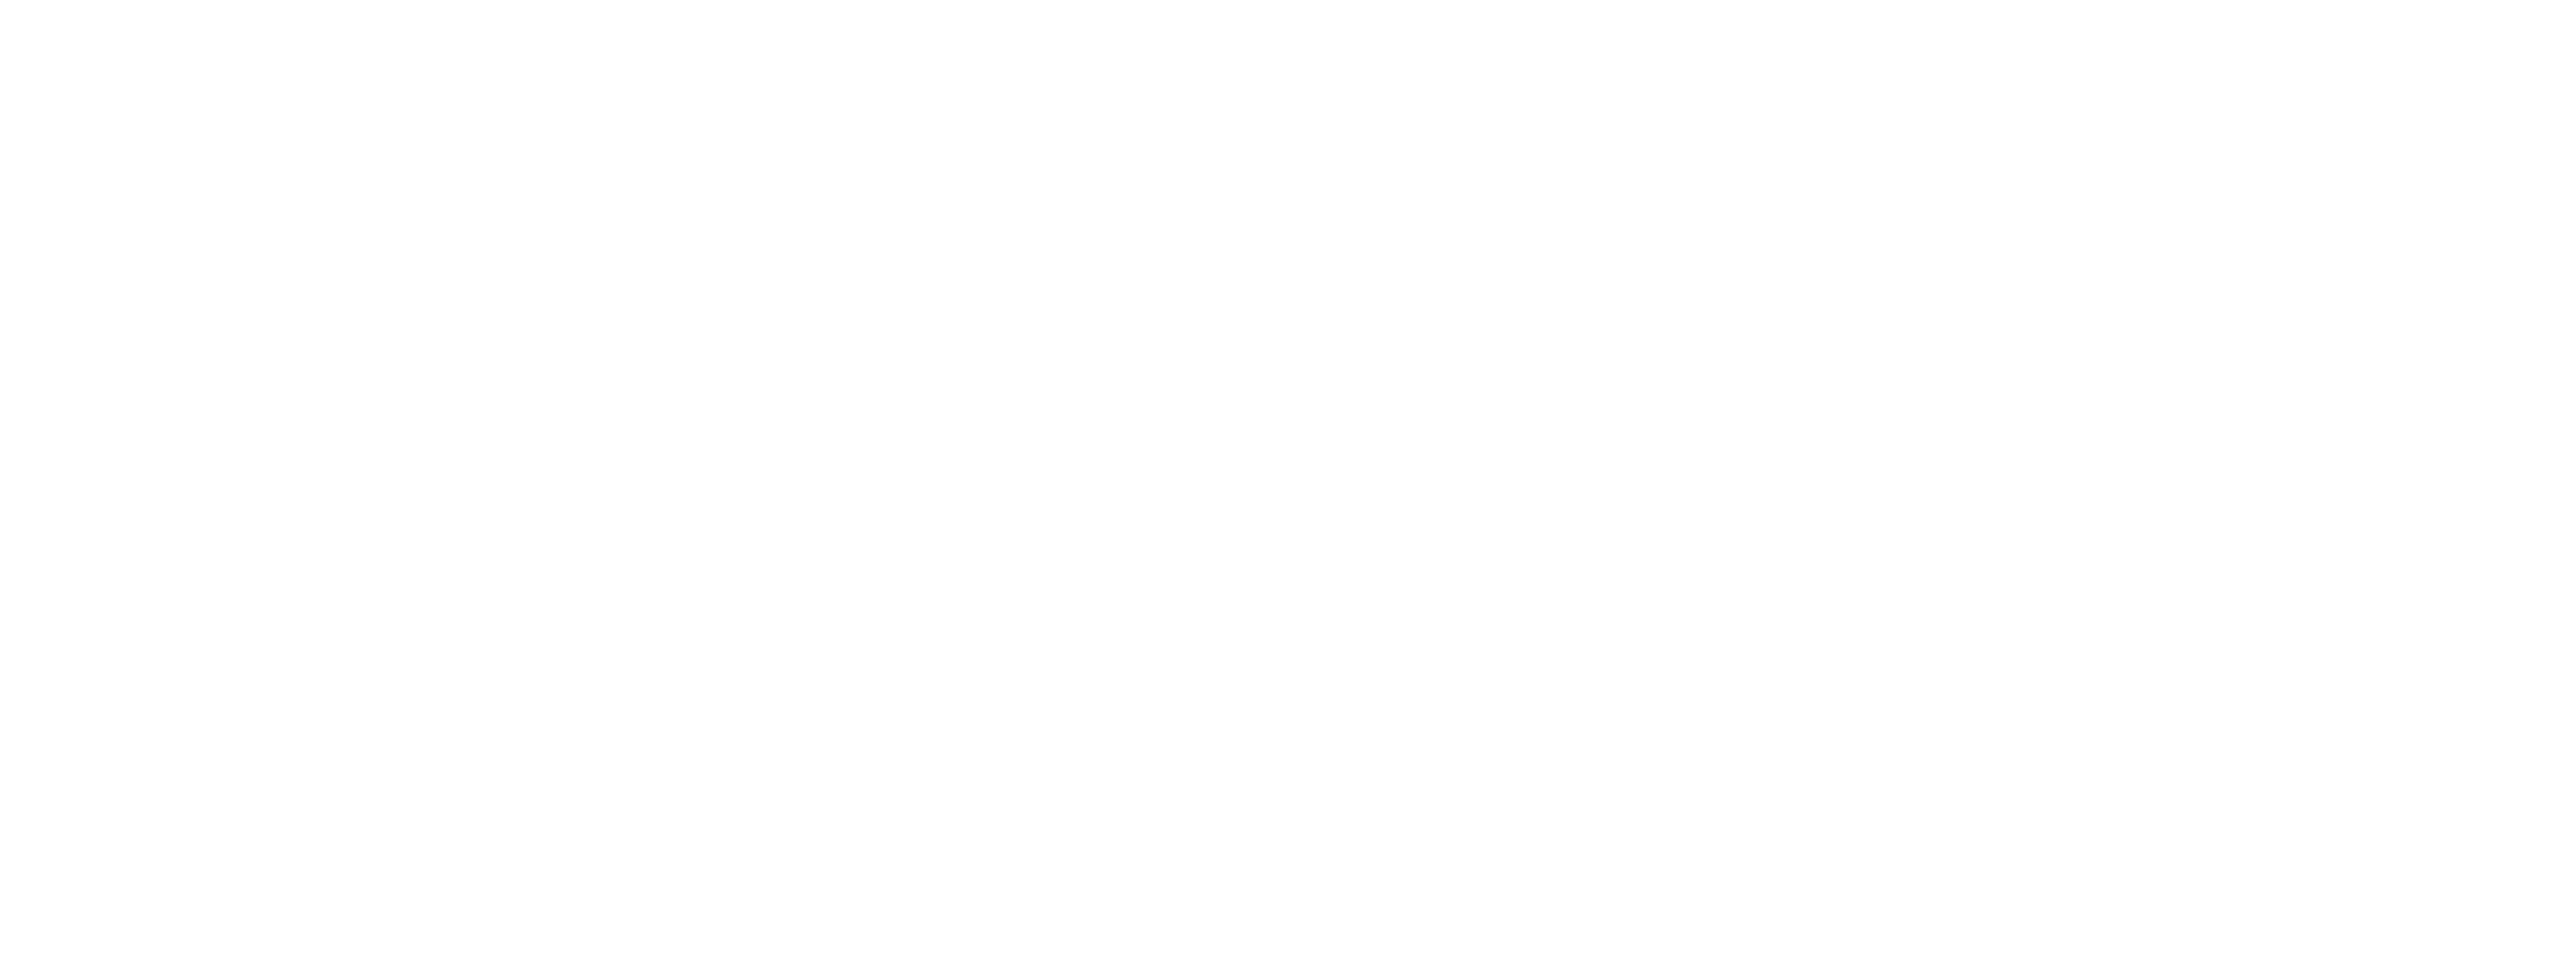 A Very Boy Band Holiday logo